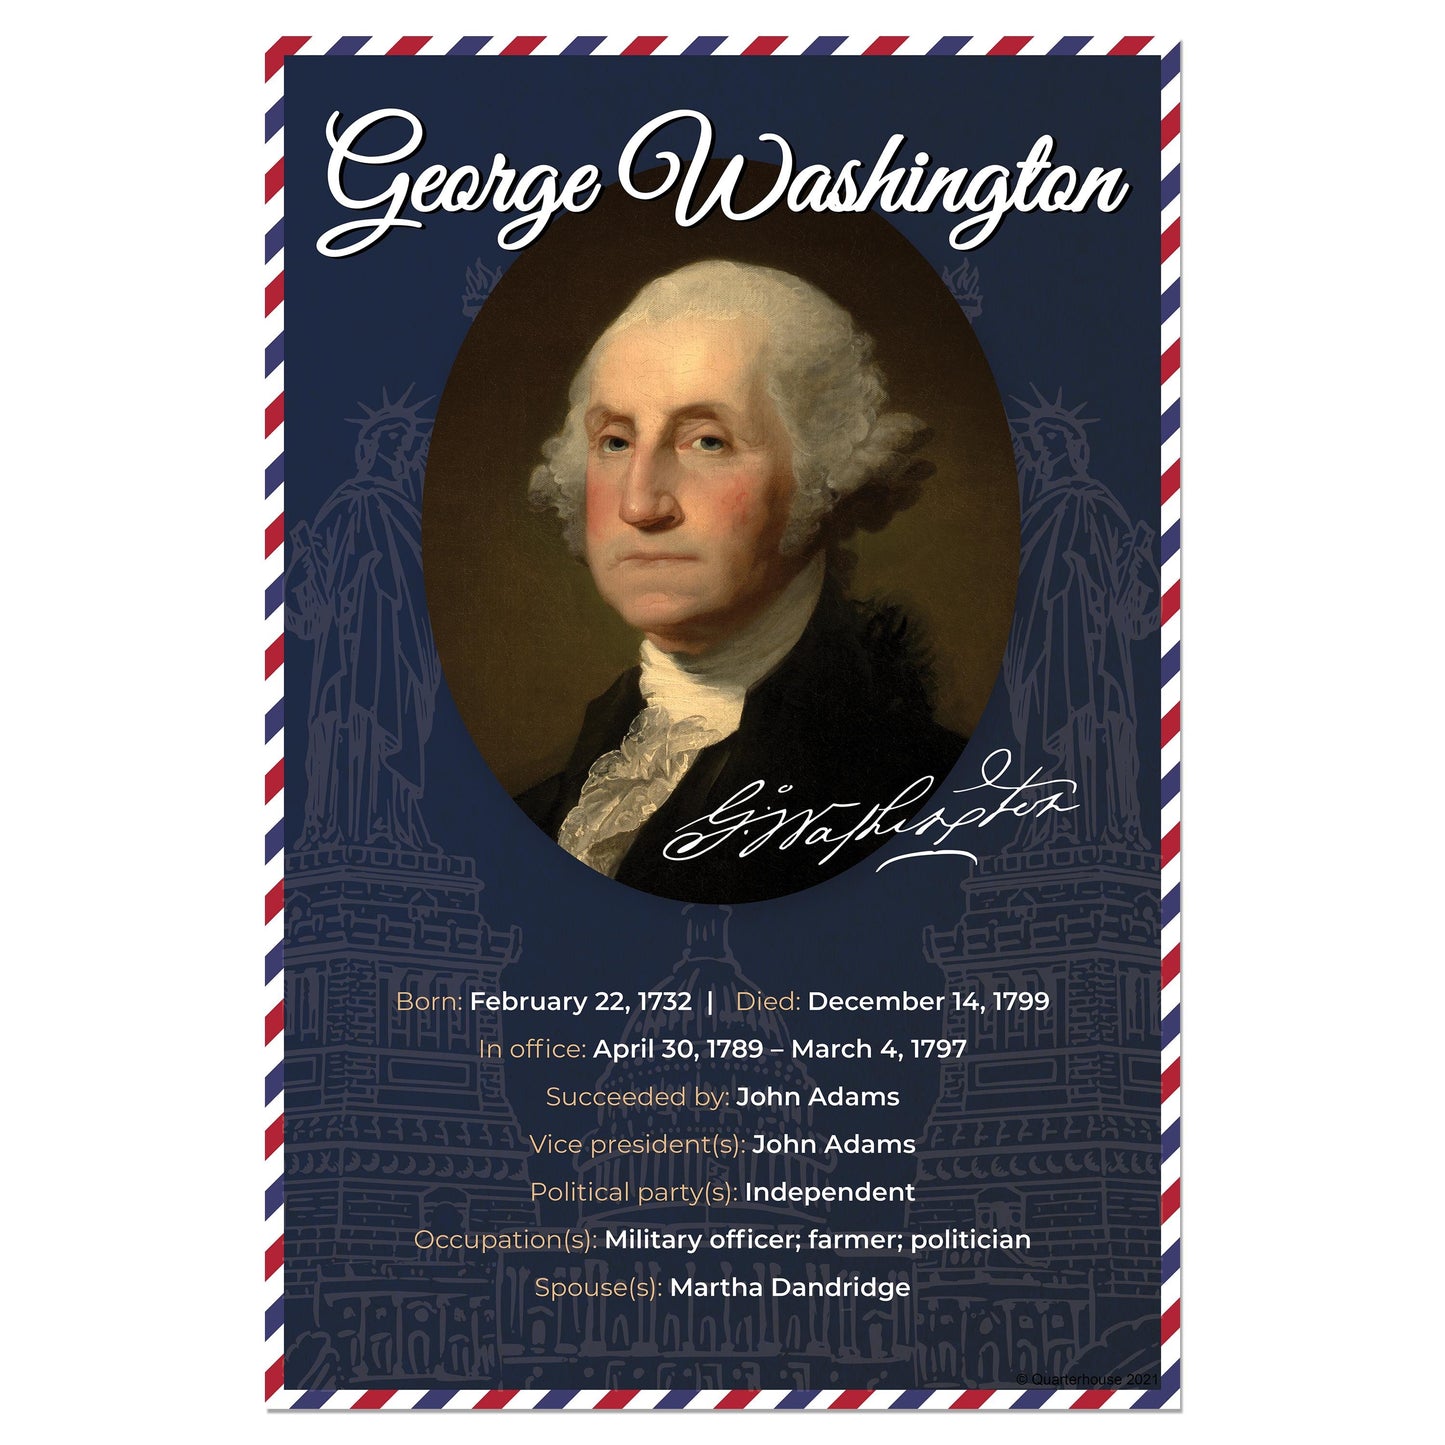 Quarterhouse President George Washington Biographical Poster, Social Studies Classroom Materials for Teachers